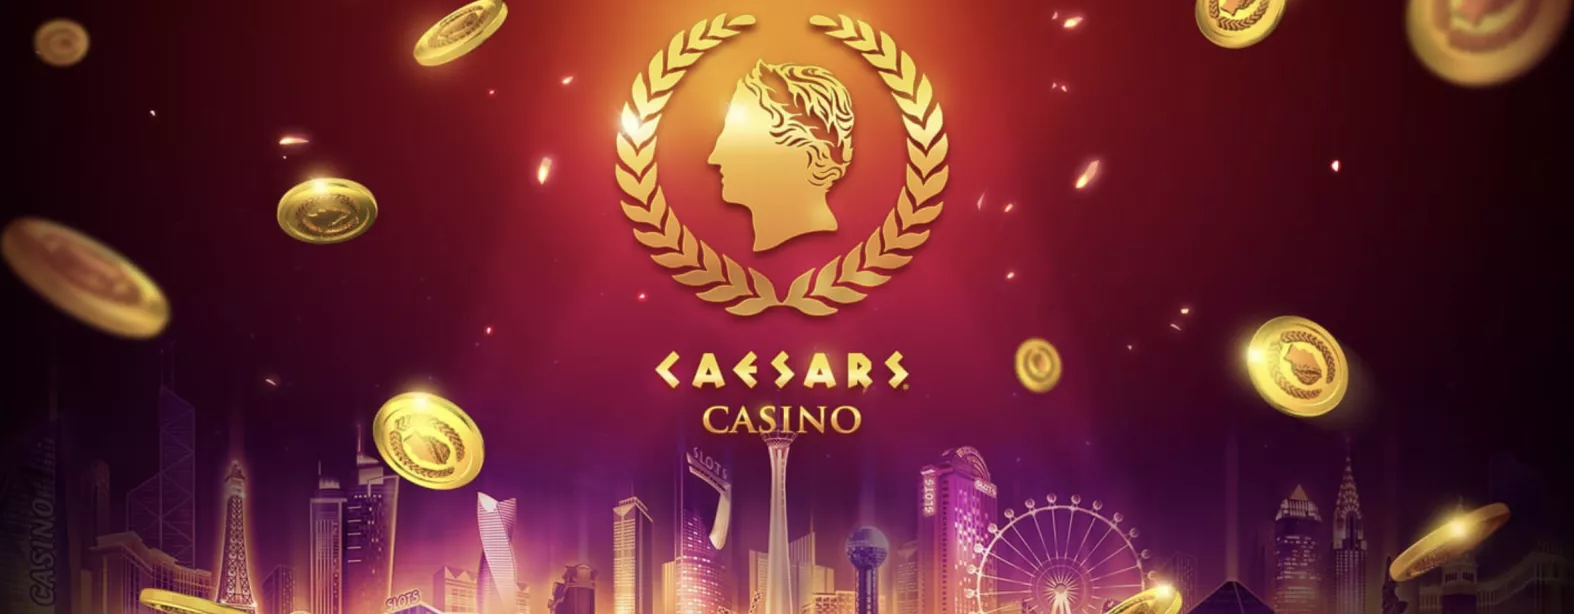 bonus code for caesars casino pa